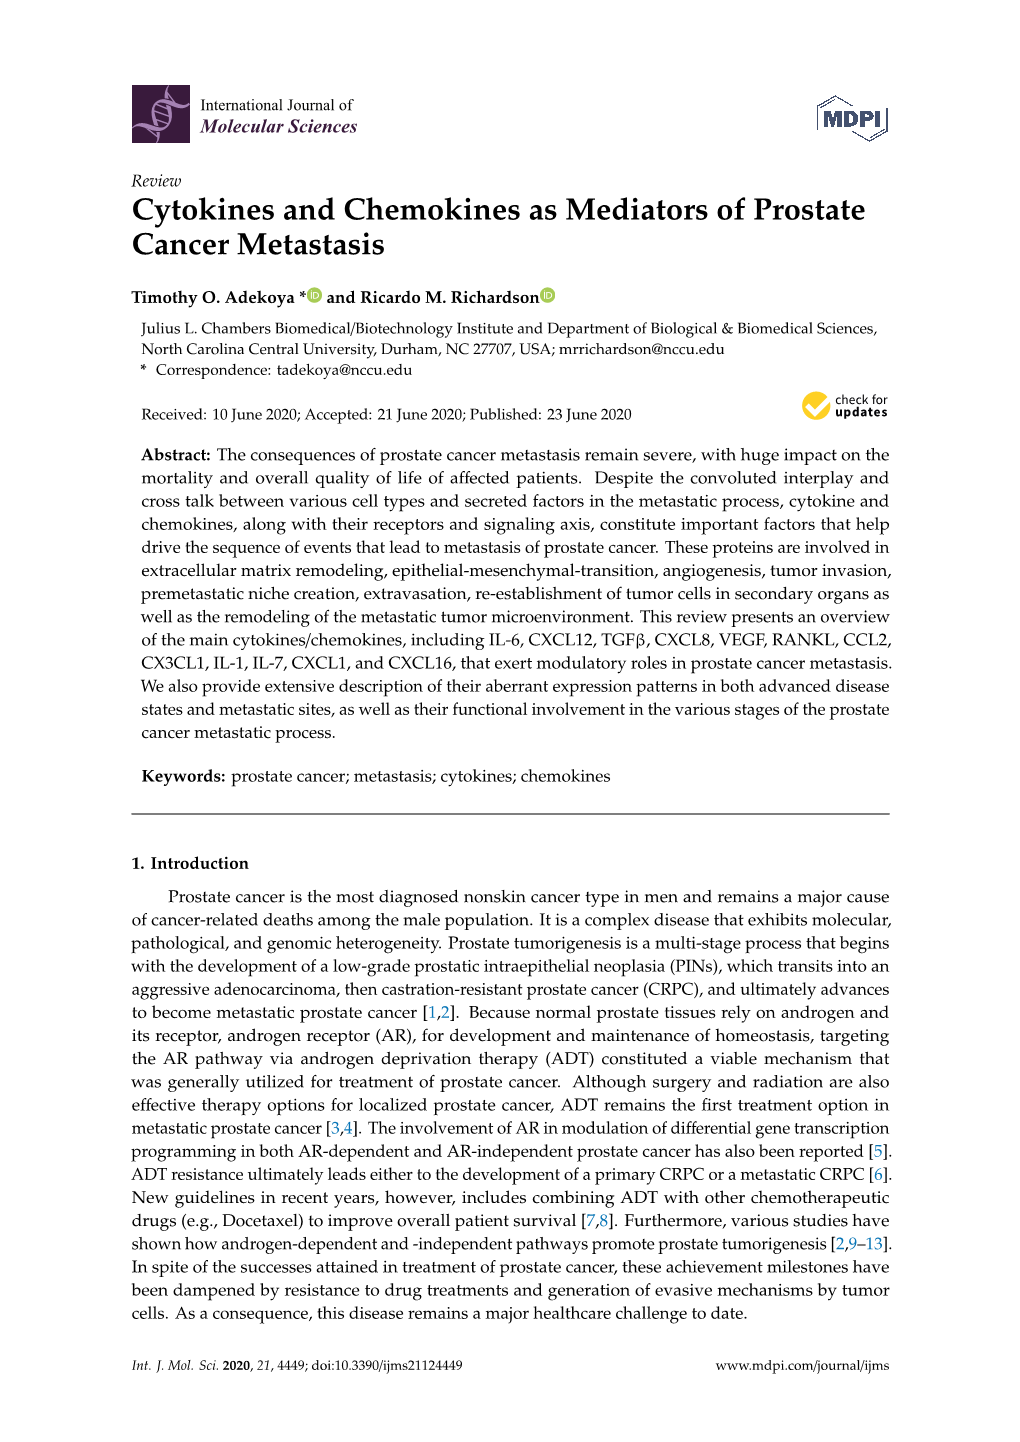 Cytokines and Chemokines As Mediators of Prostate Cancer Metastasis